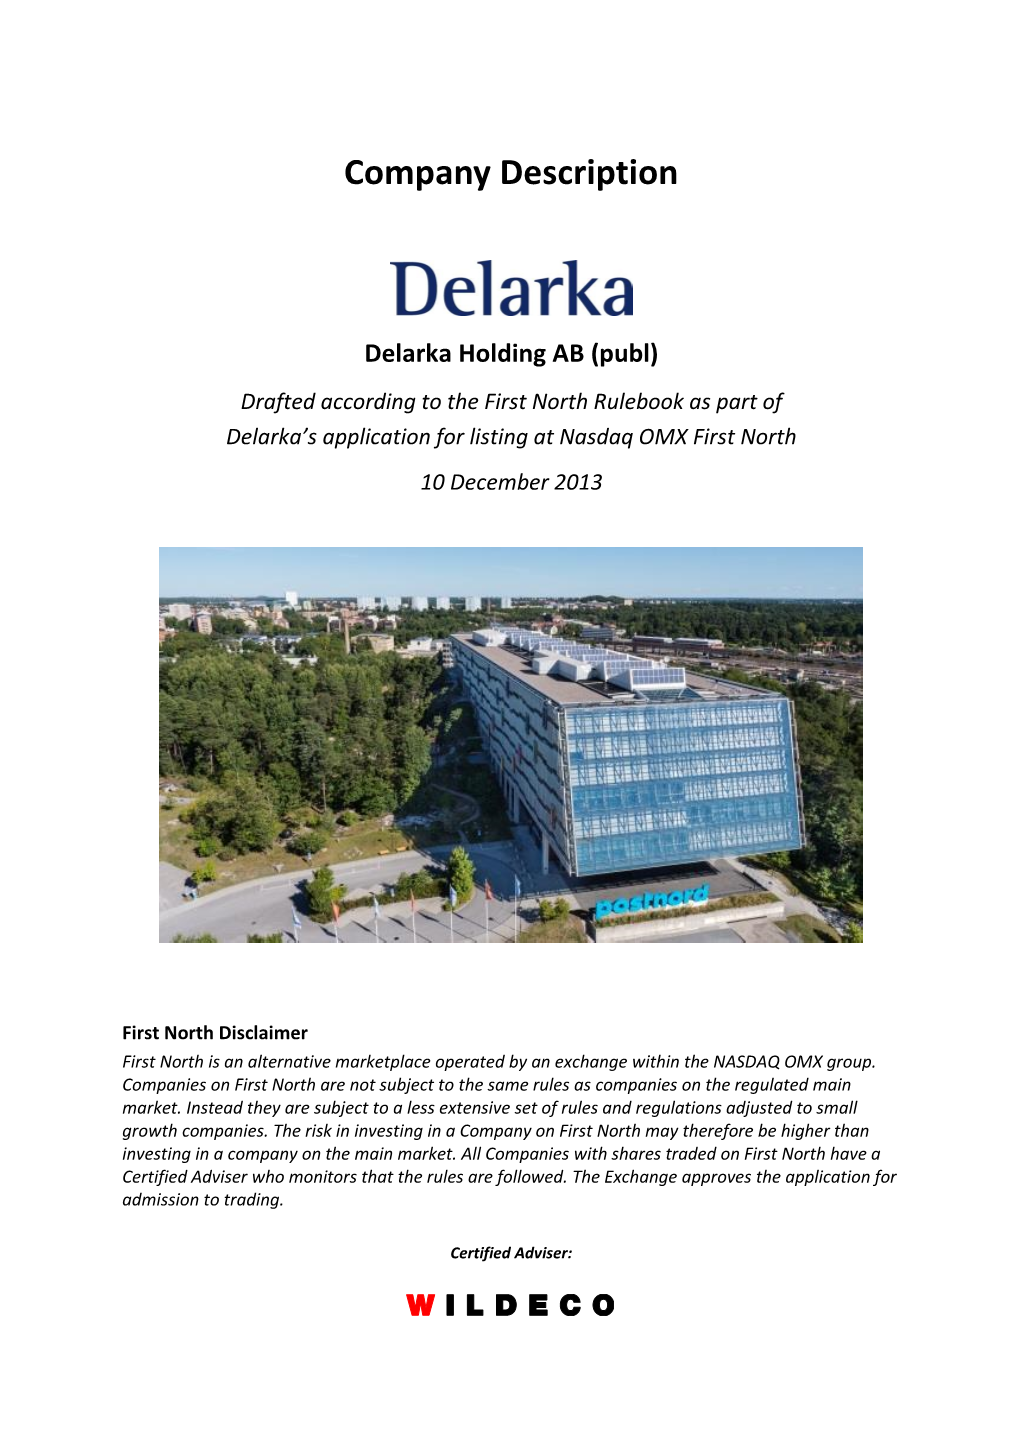 Company Description Delarka Holding AB